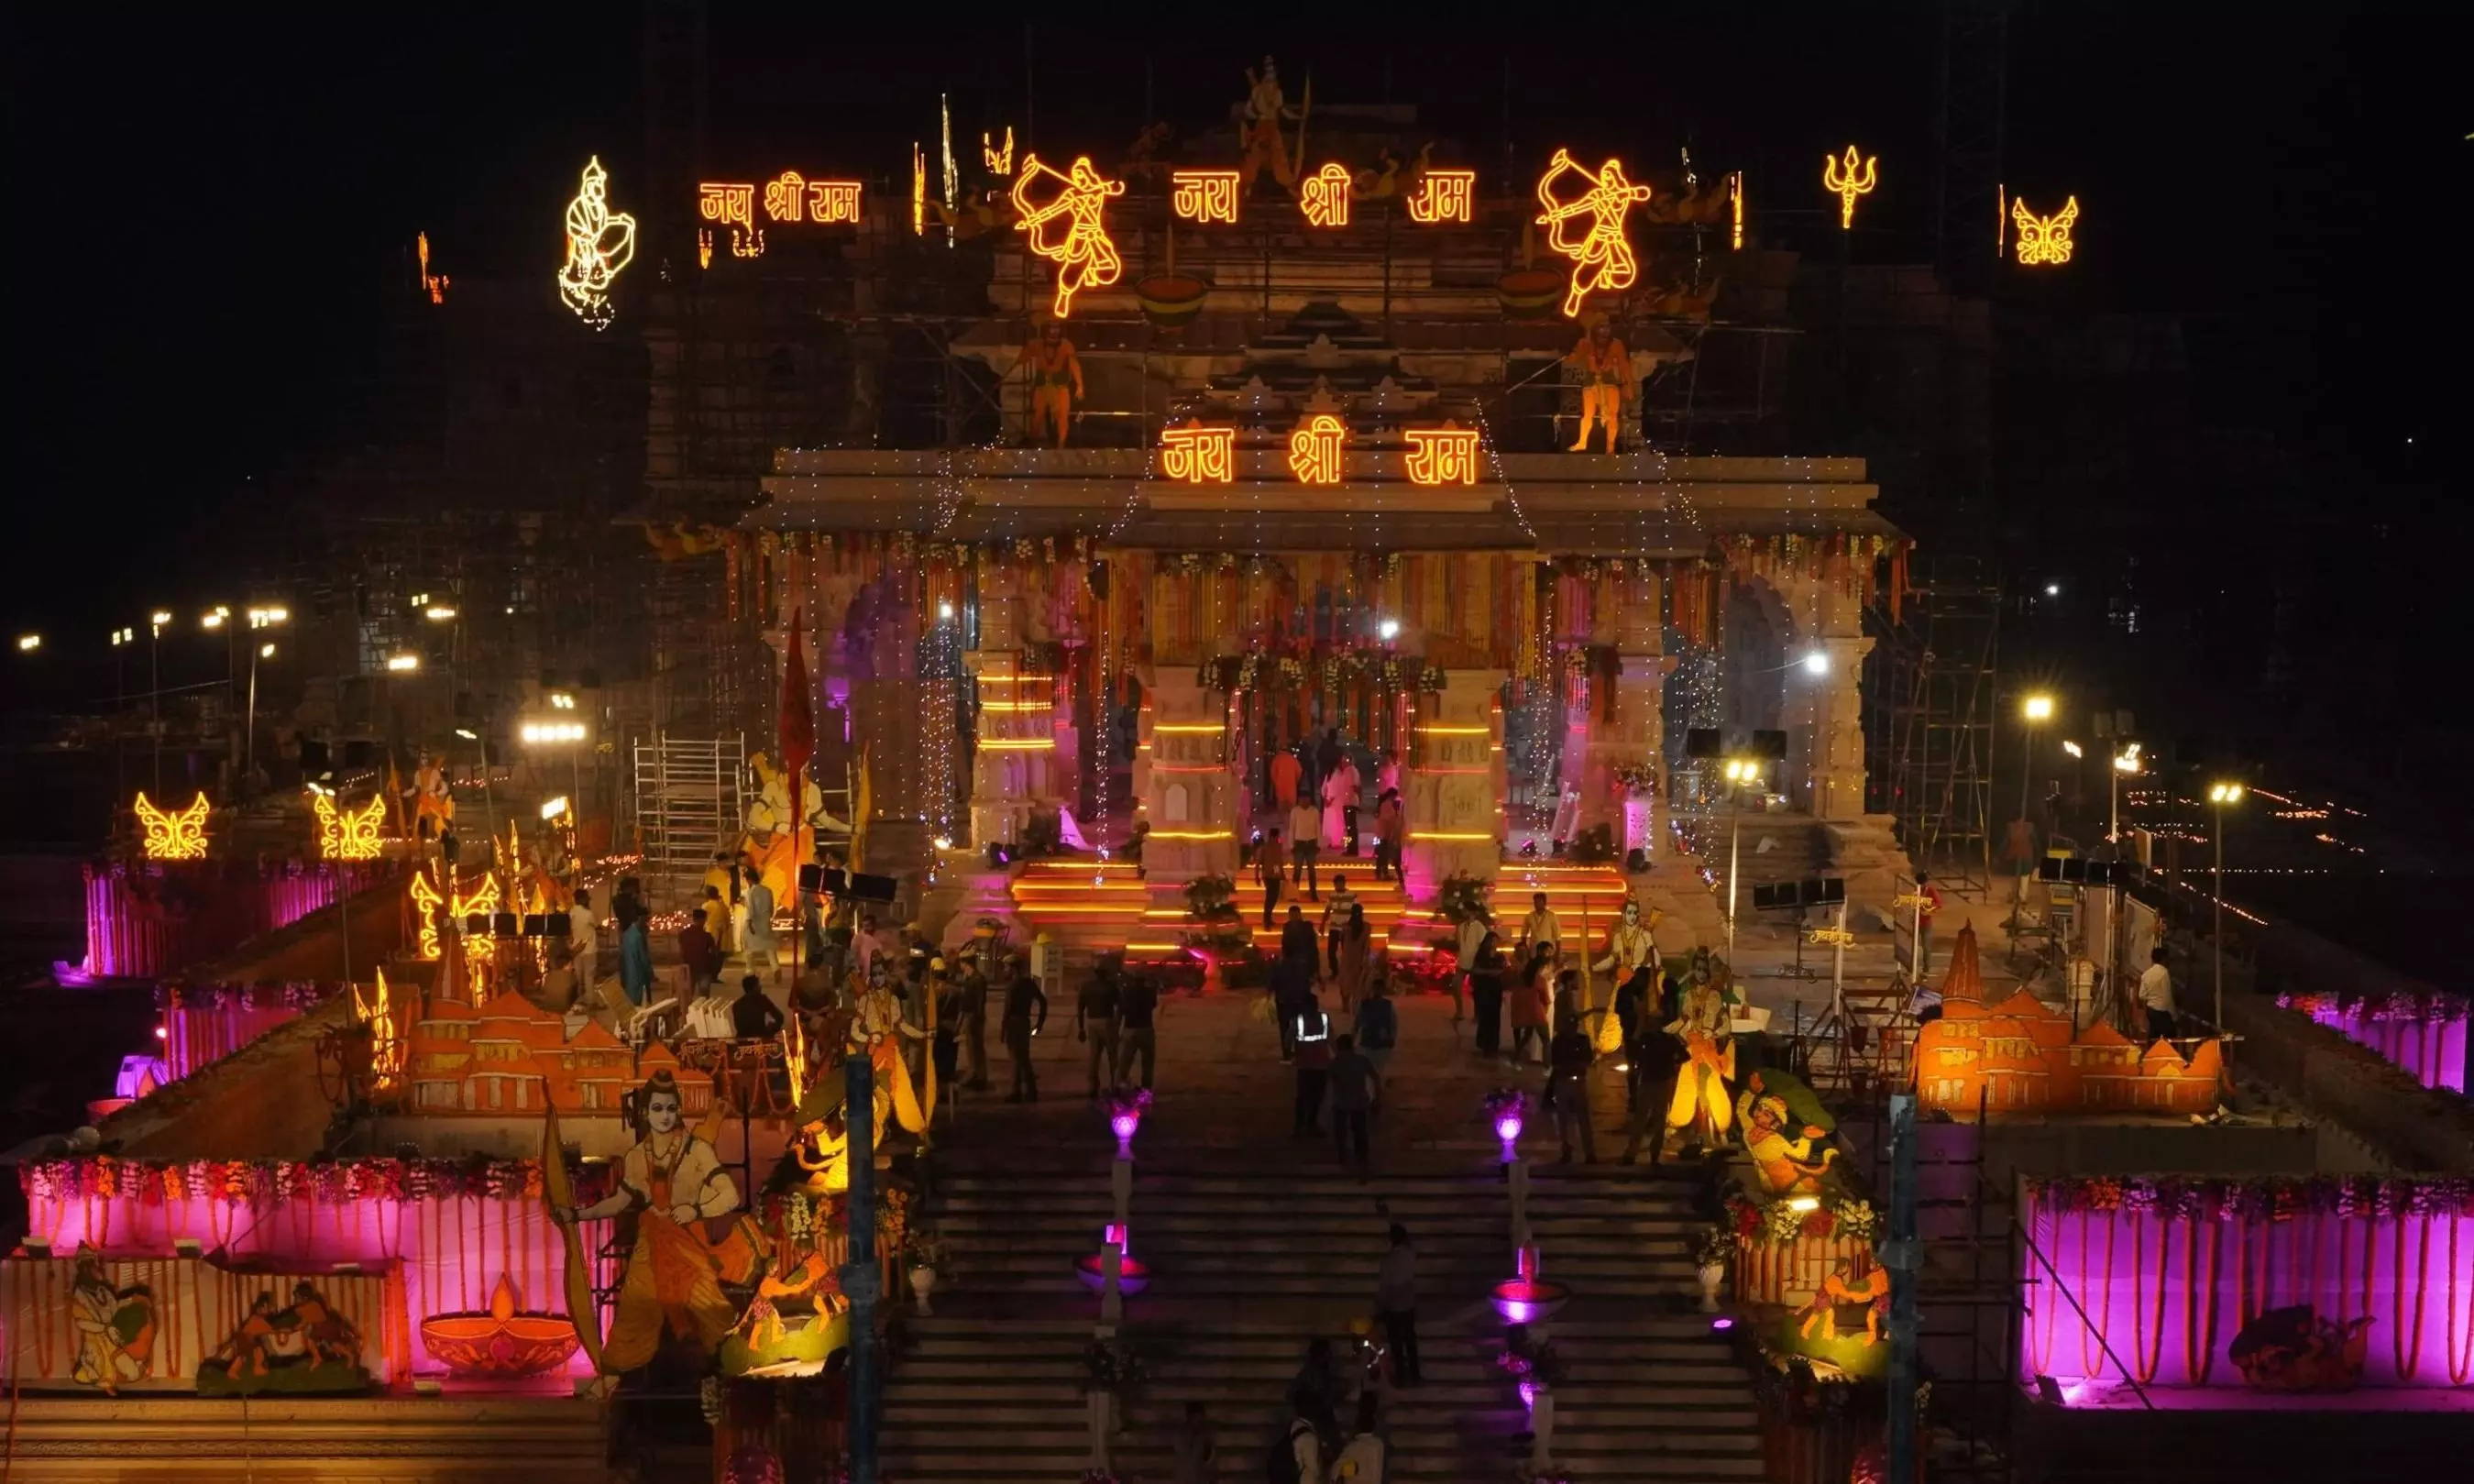 Shri Ram Janmabhoomi complex in Ayodhya, Ram temple